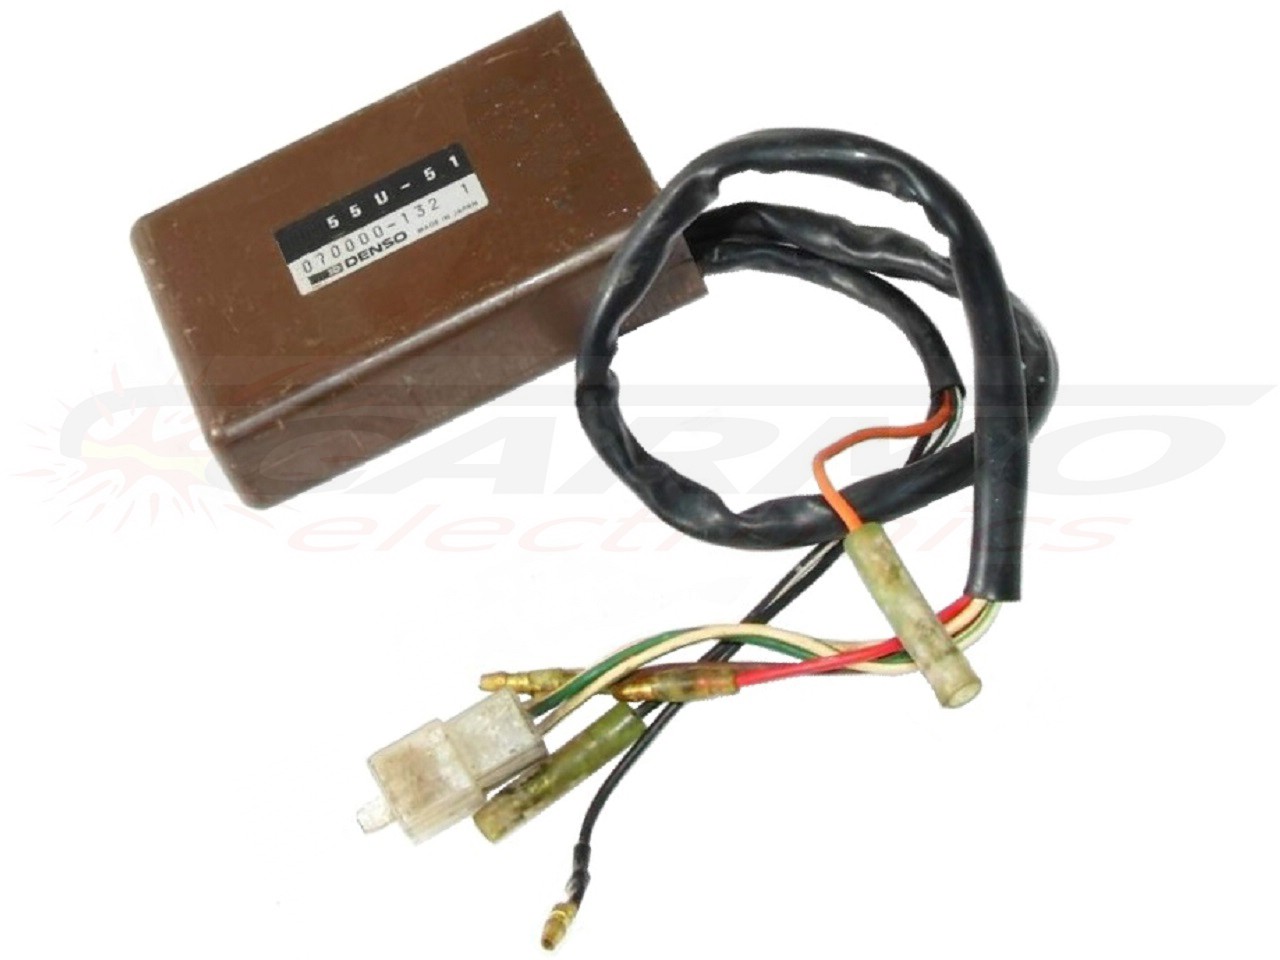 TT600 XT600 CDI dispositif de commande boîte noire (55U-50, 55U-51)